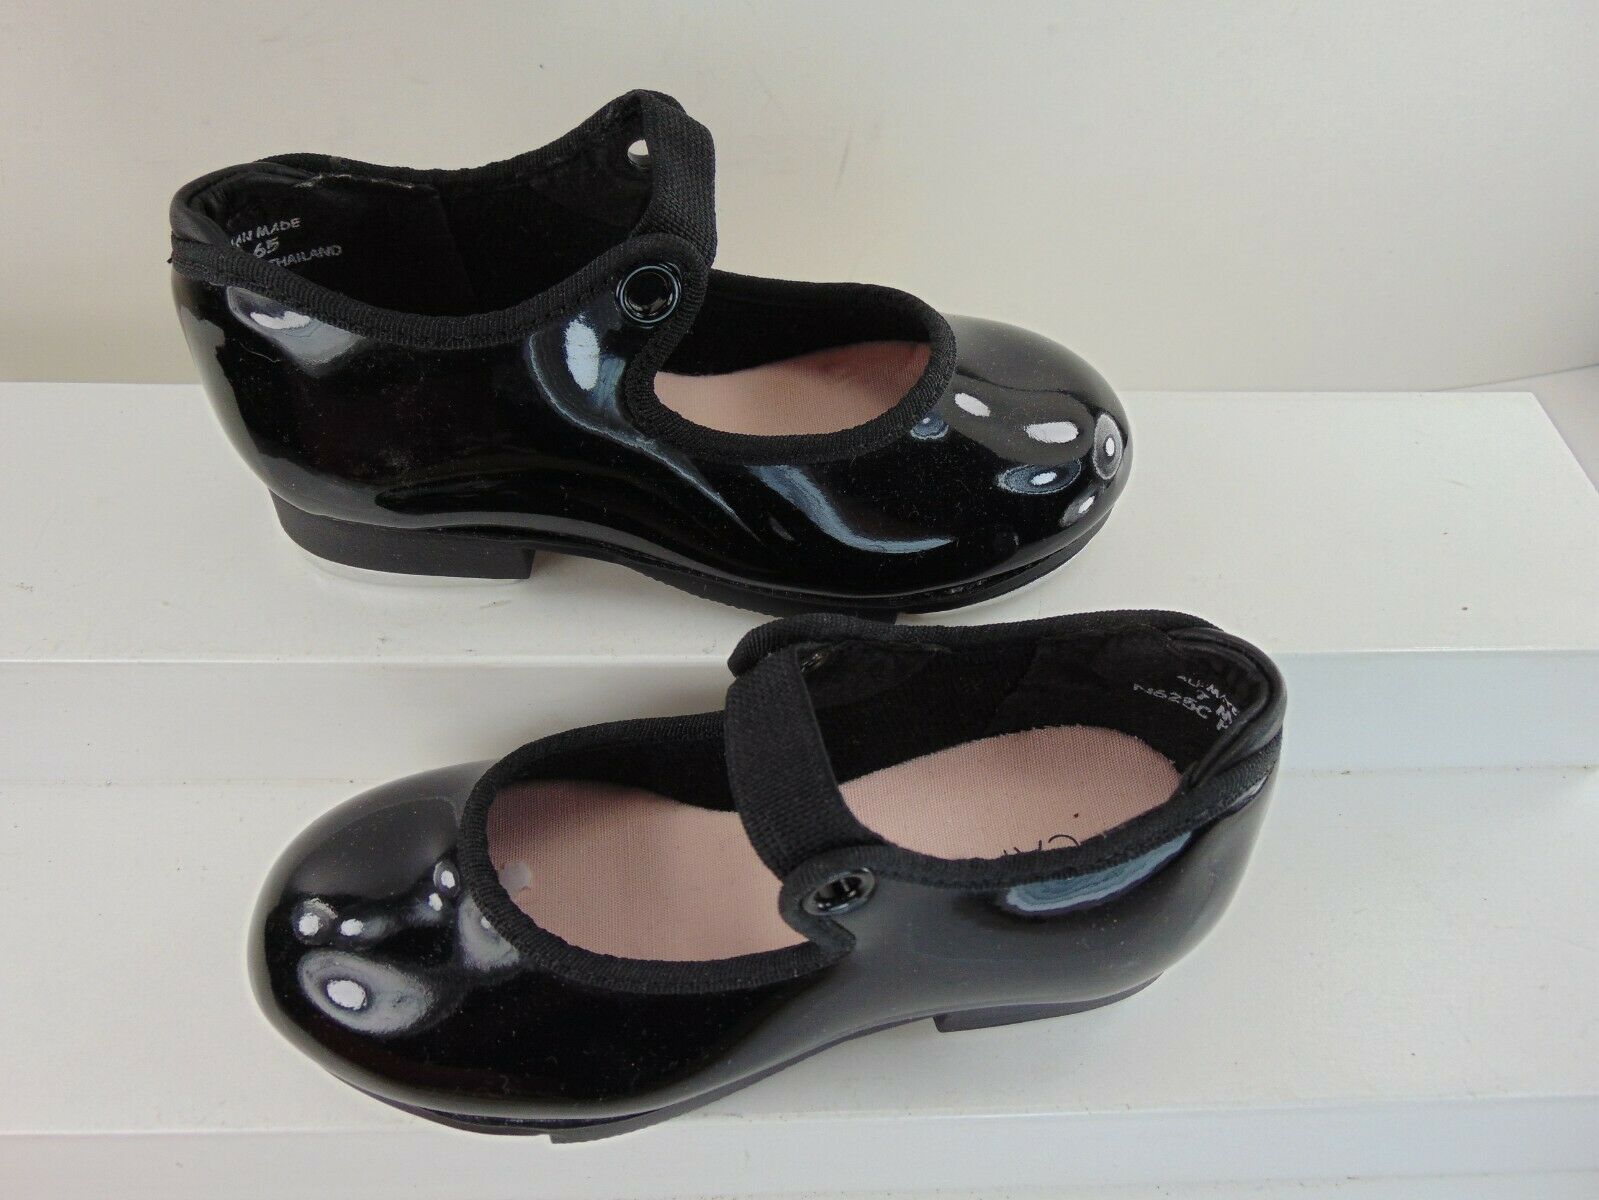 N625c (new In Box) Toddler & Kids Capezio Jr Tyette Tap Shoe - Black Patent 7 M